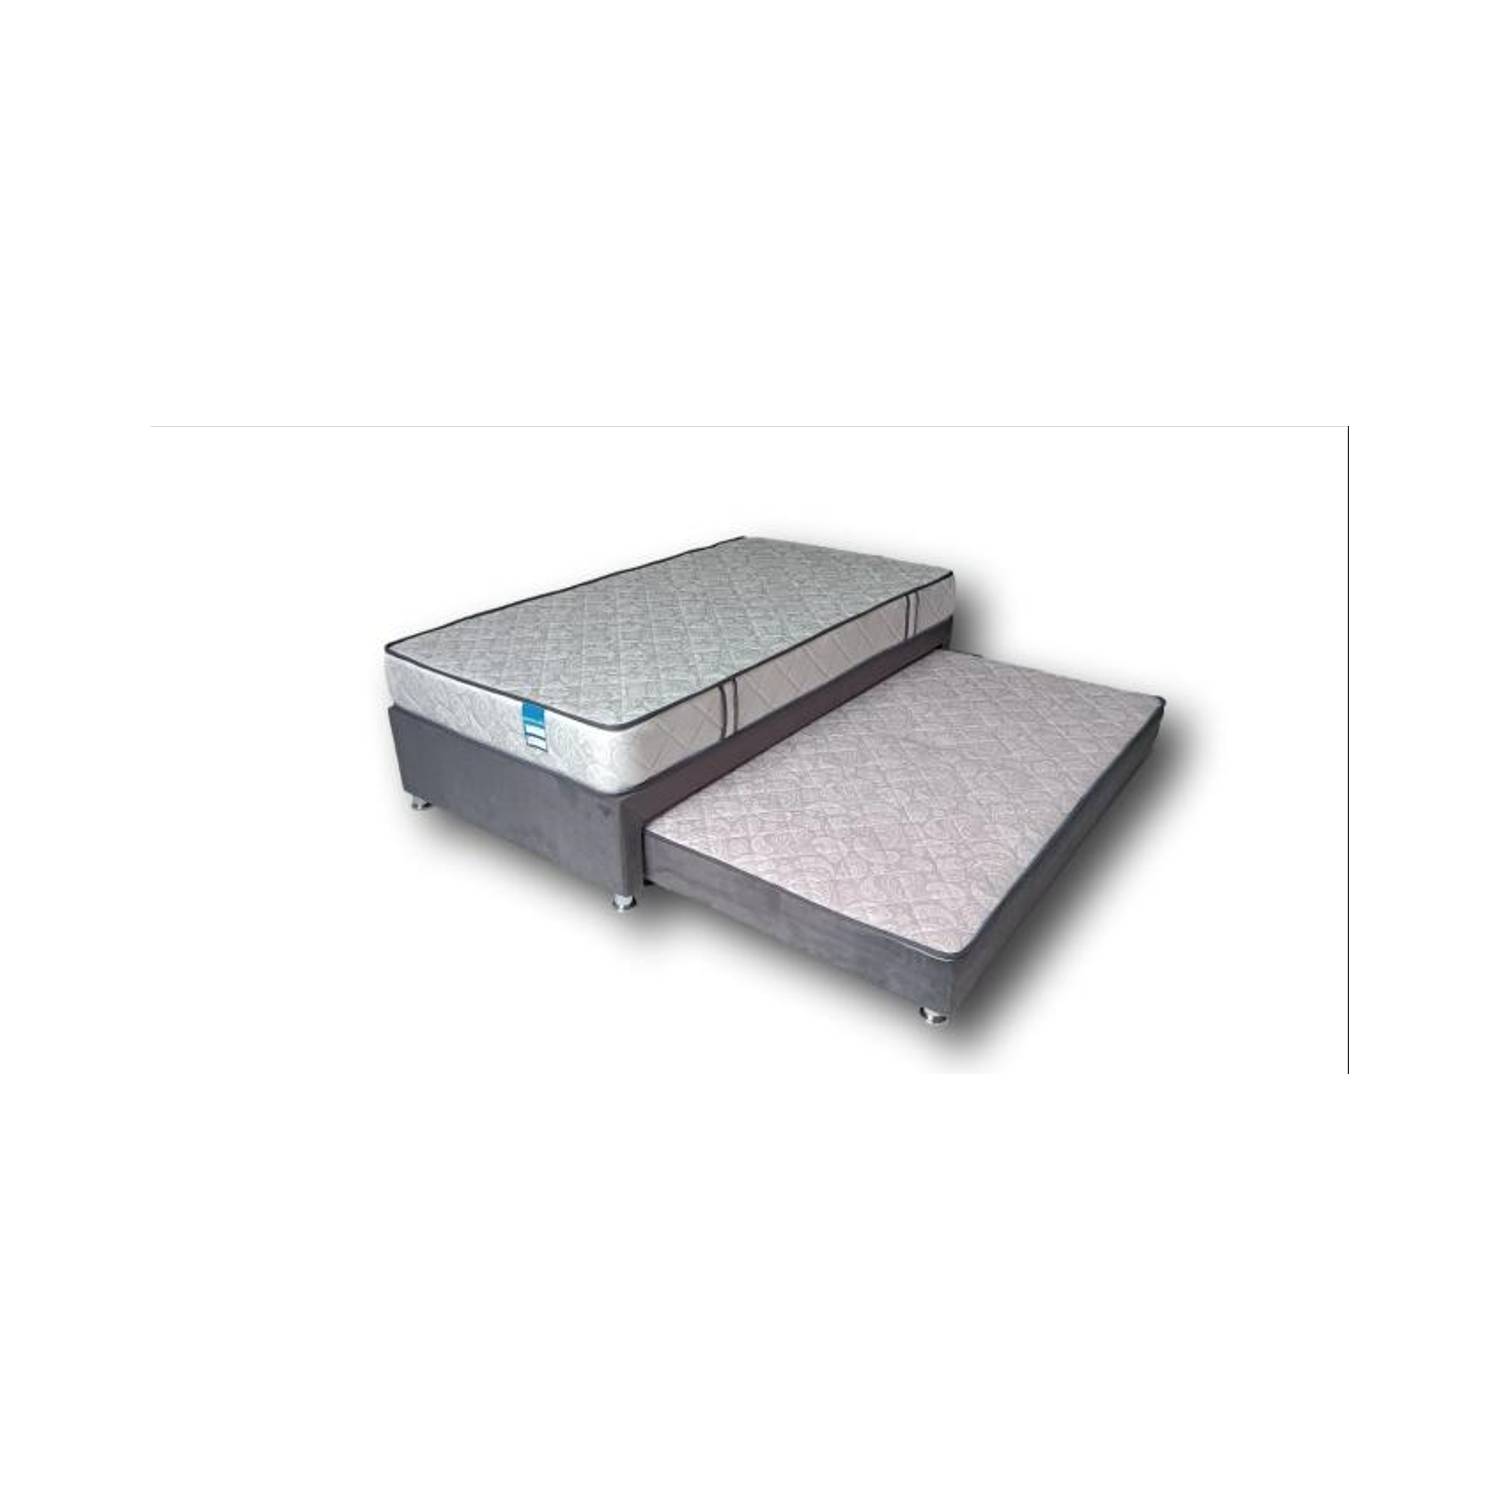 Colchon 90x190 BASIC PRO - Altura 13 CM - Desenfundable, Ergonomico,  Transpirable, Lavable, Memory. Ideal para cama nido